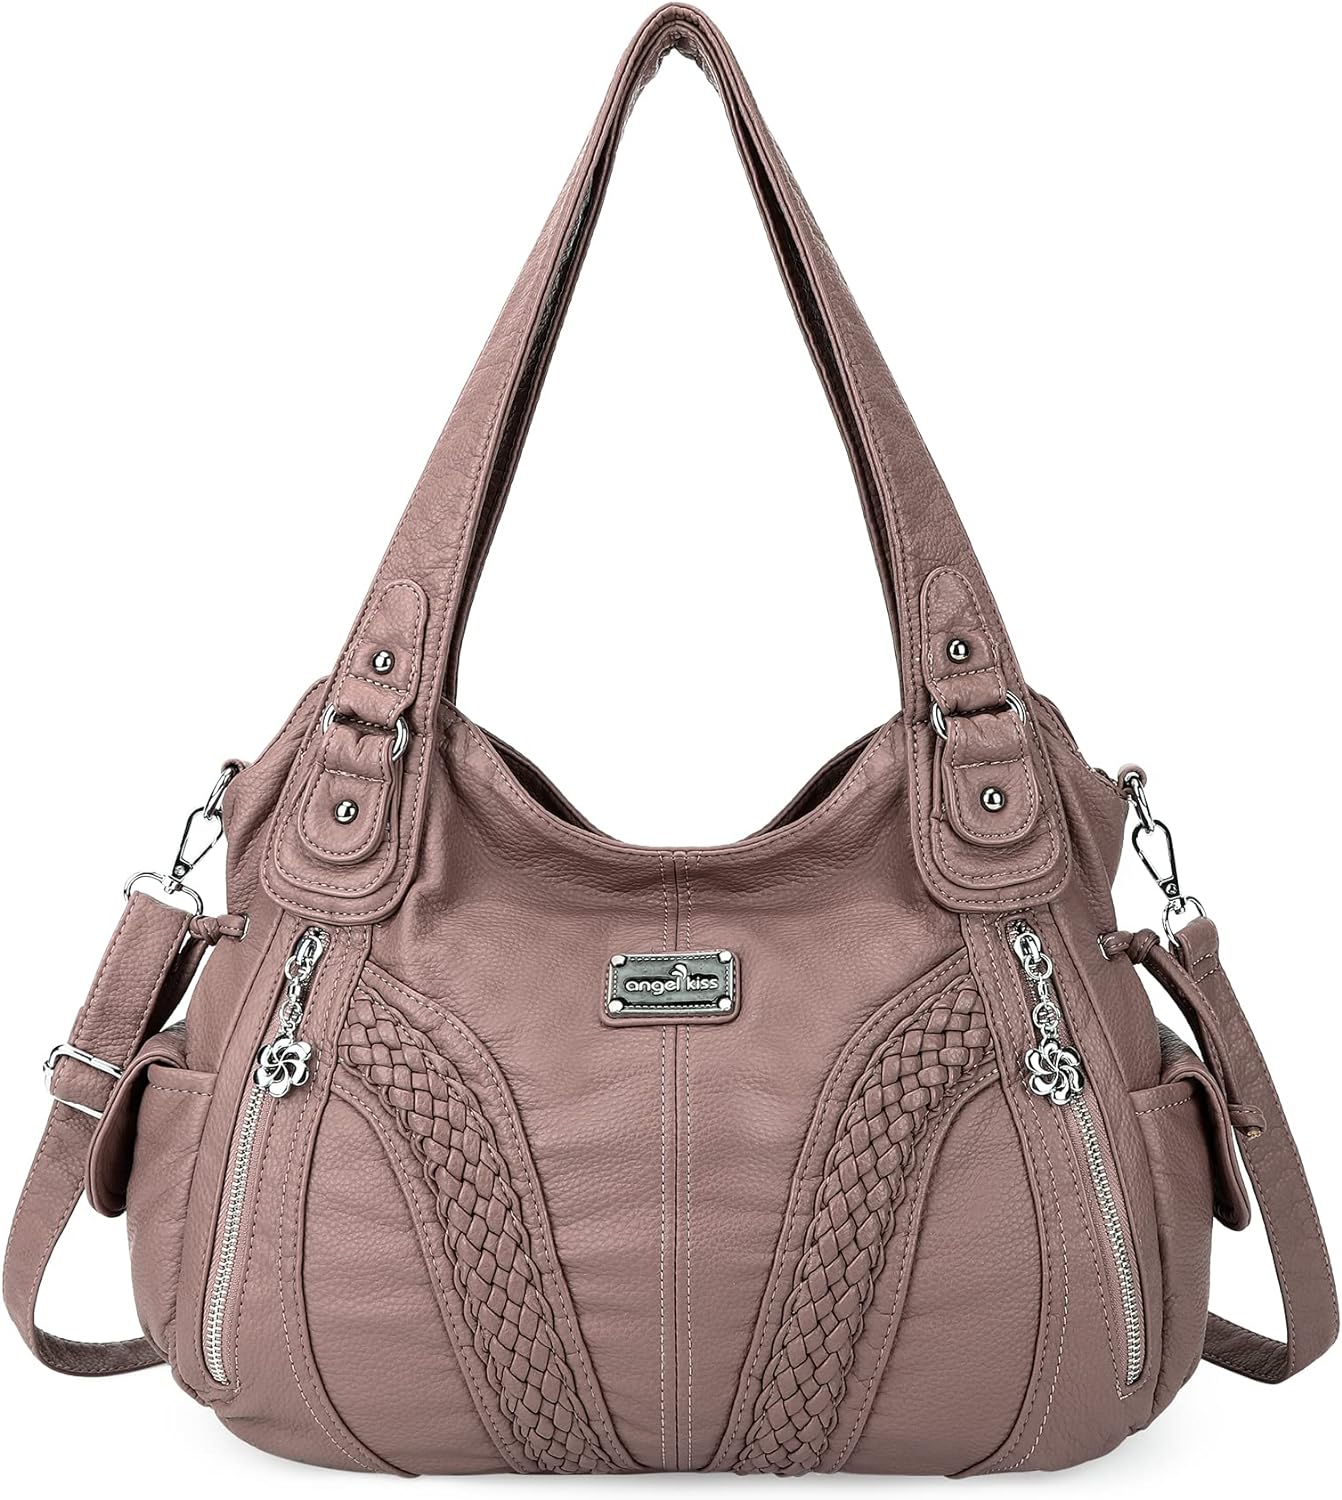 Women PU Leather Tote Shoulder Bags Hobo Handbags Satchel Messenger Bag Purse QK